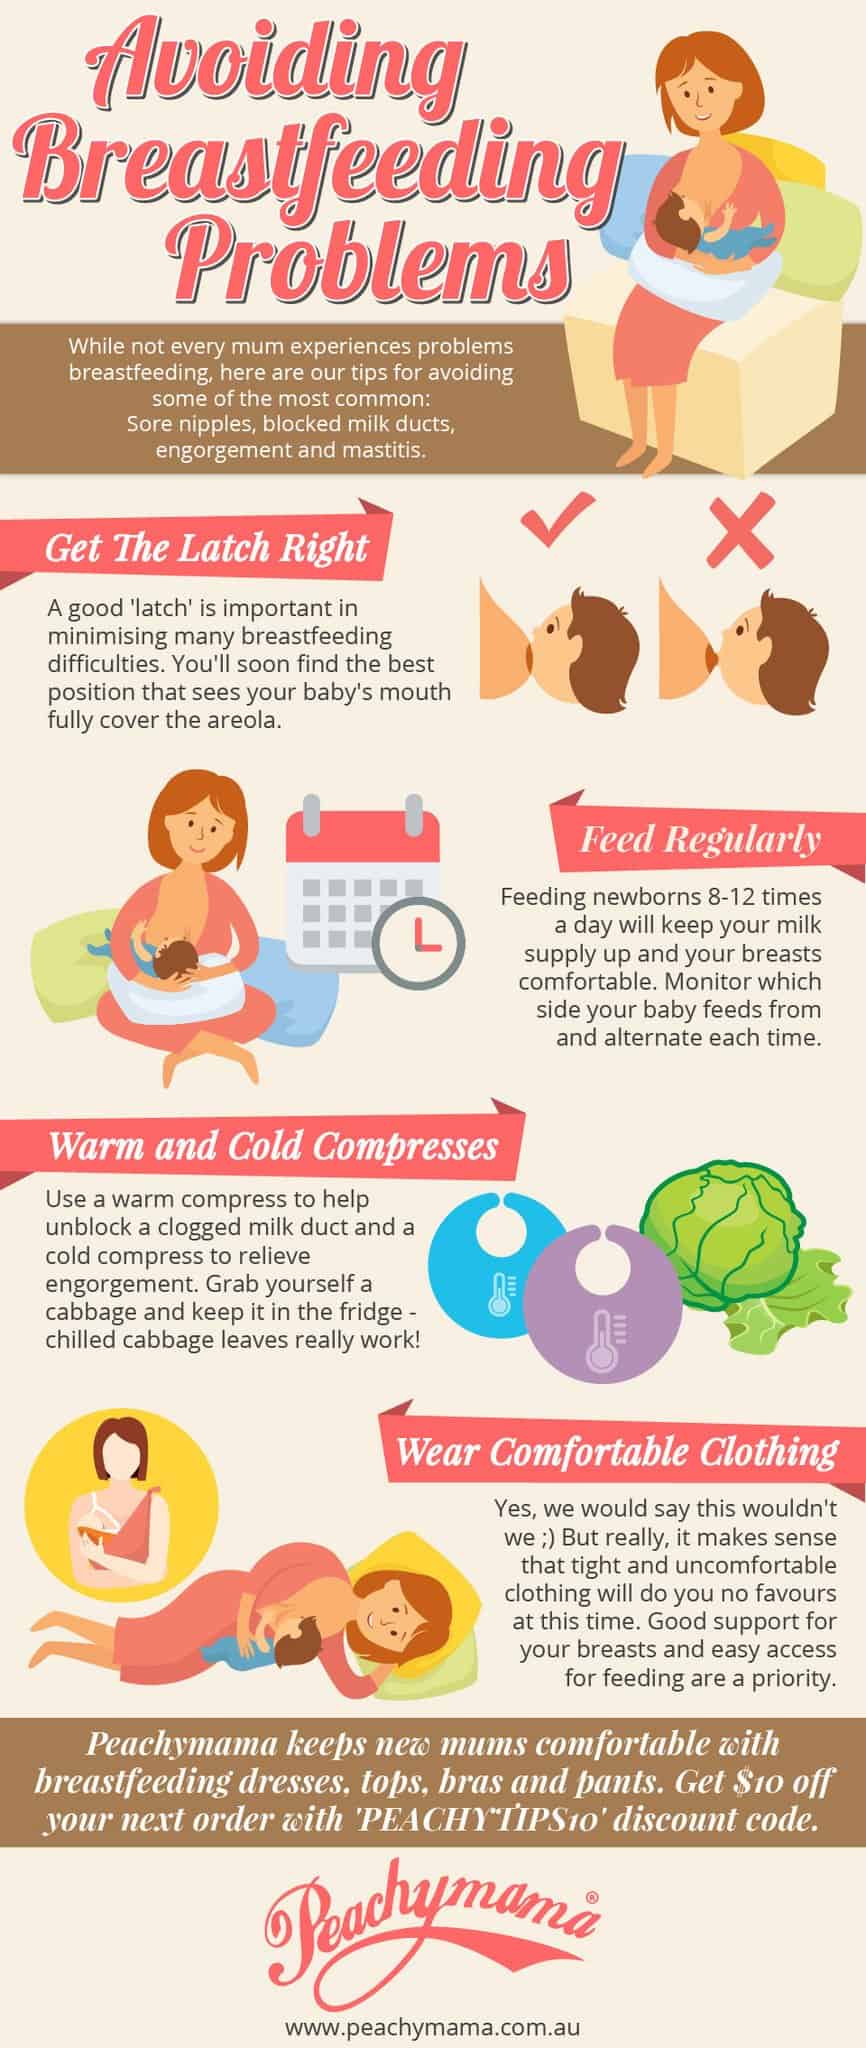 Avoiding Breastfeeding Problems Infographic